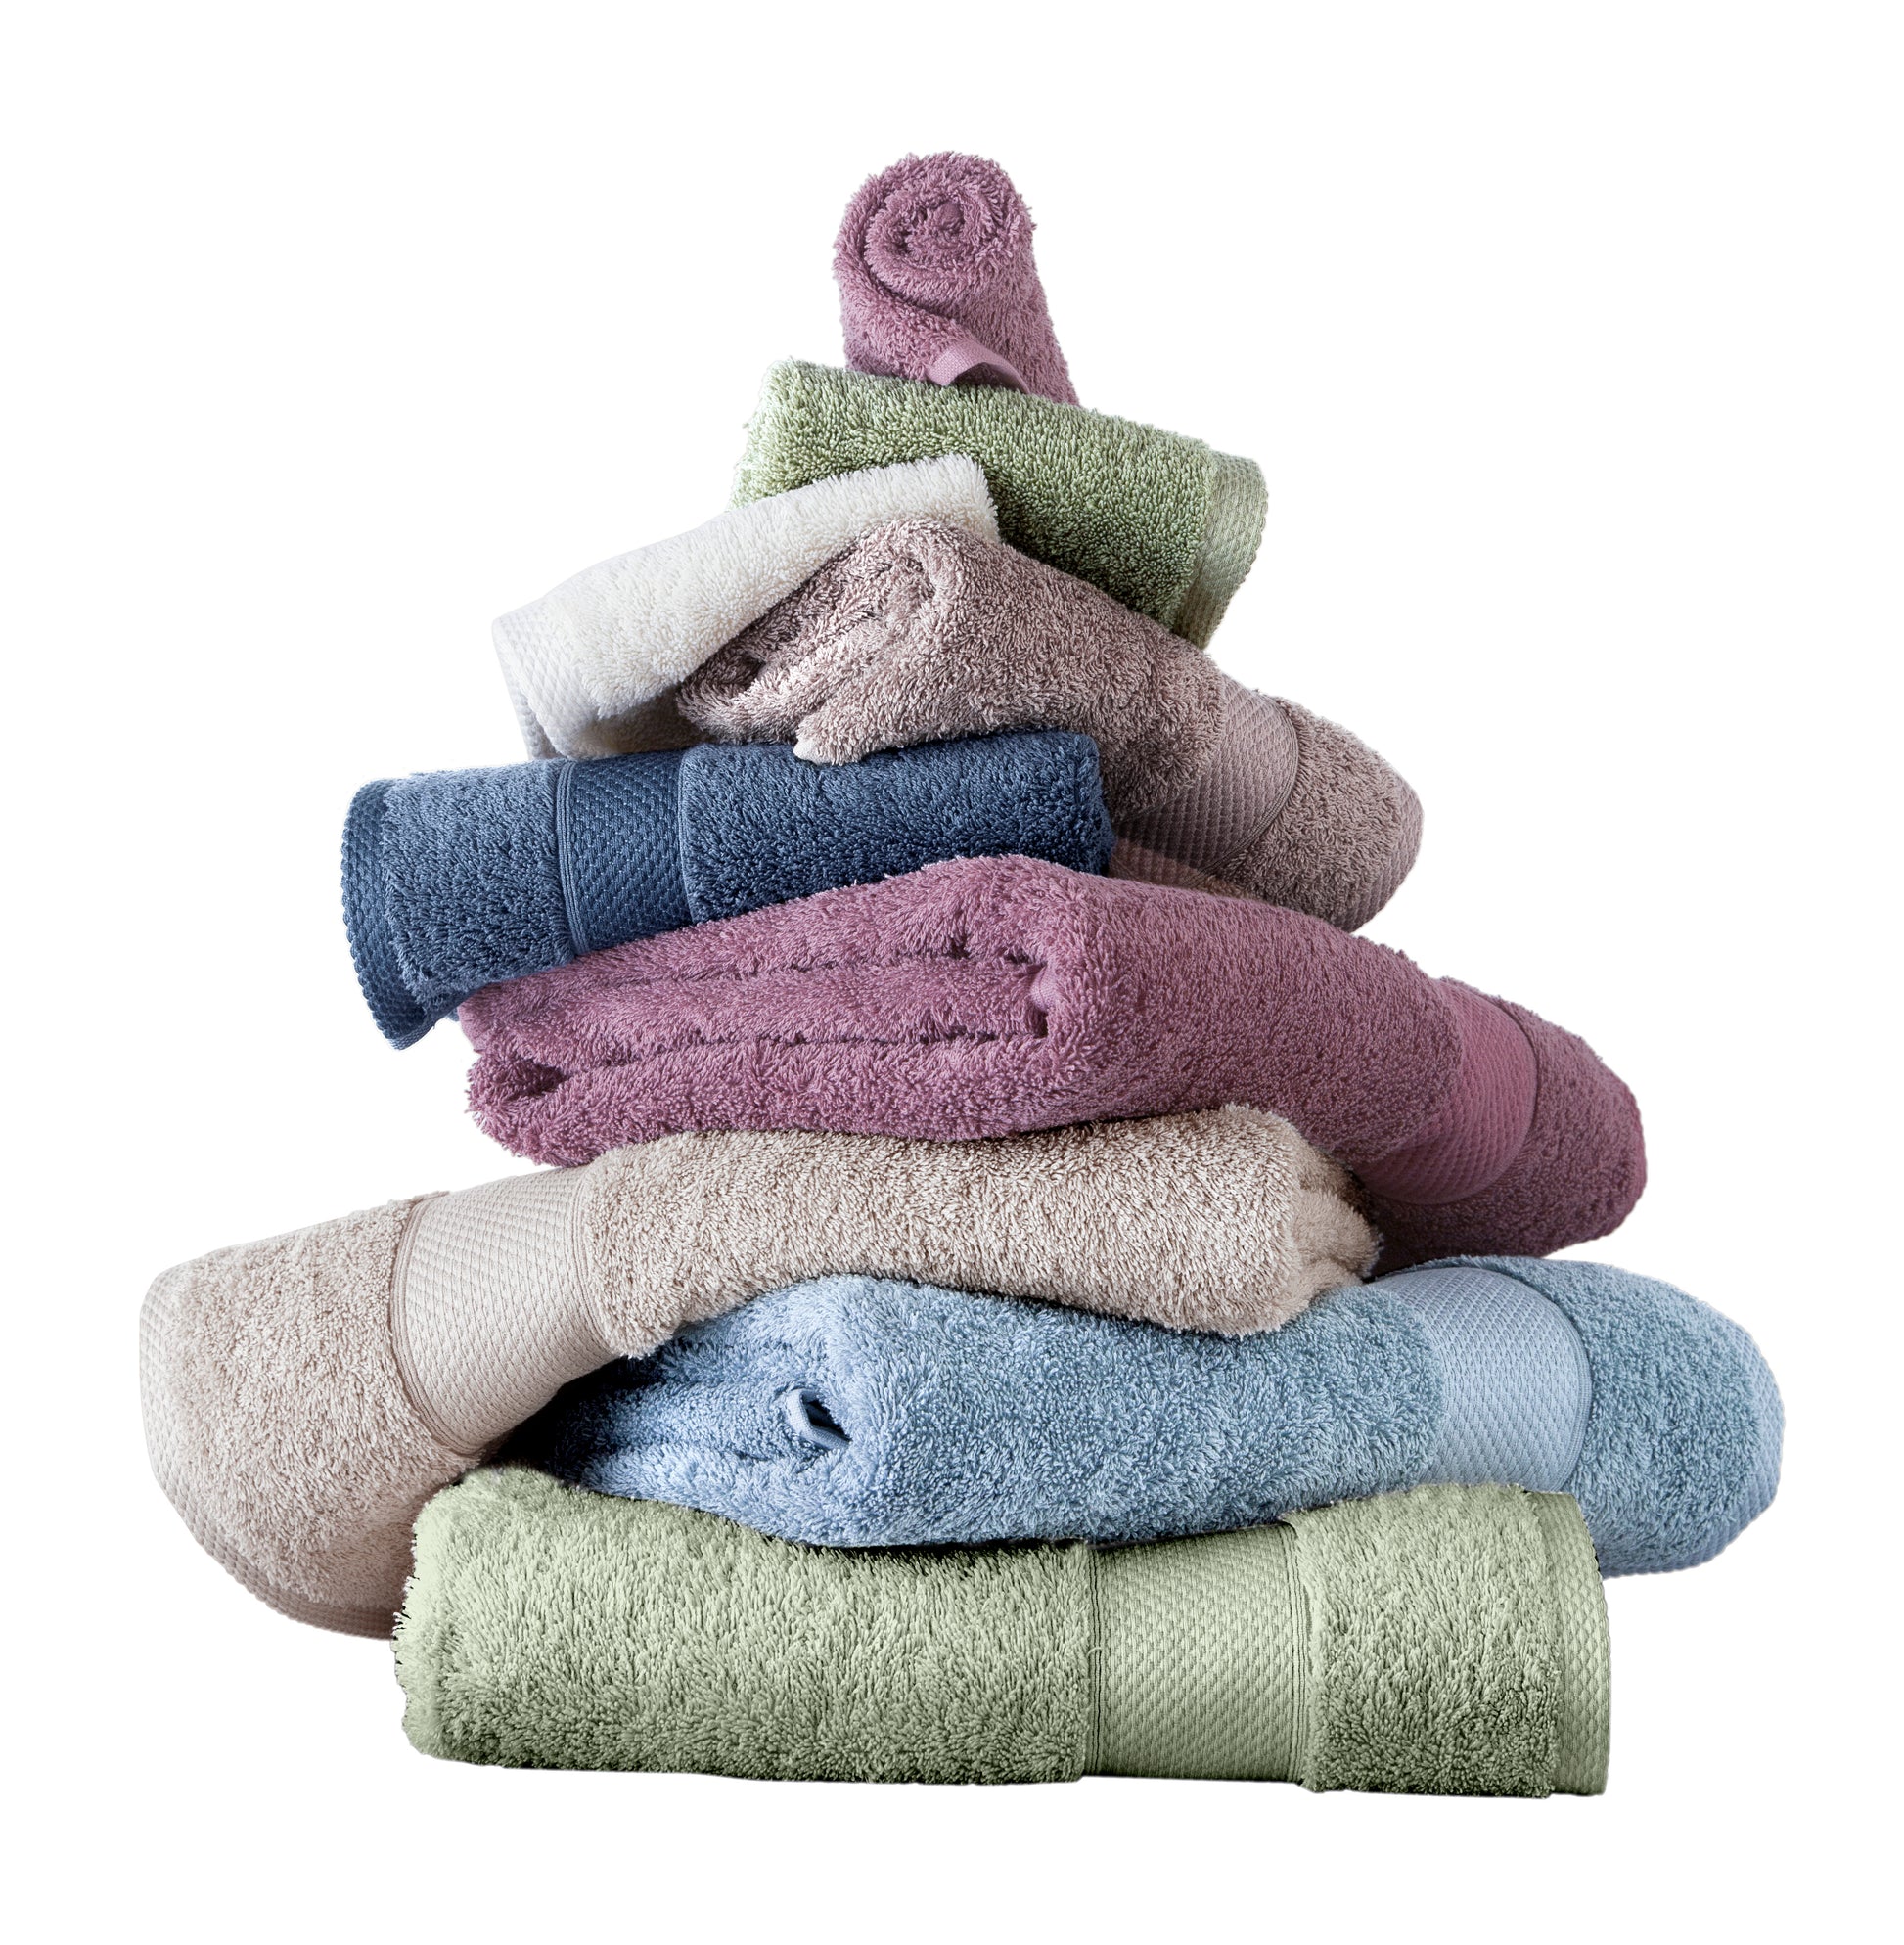 Madison Luxury Turkish Cotton Towel Set of 6